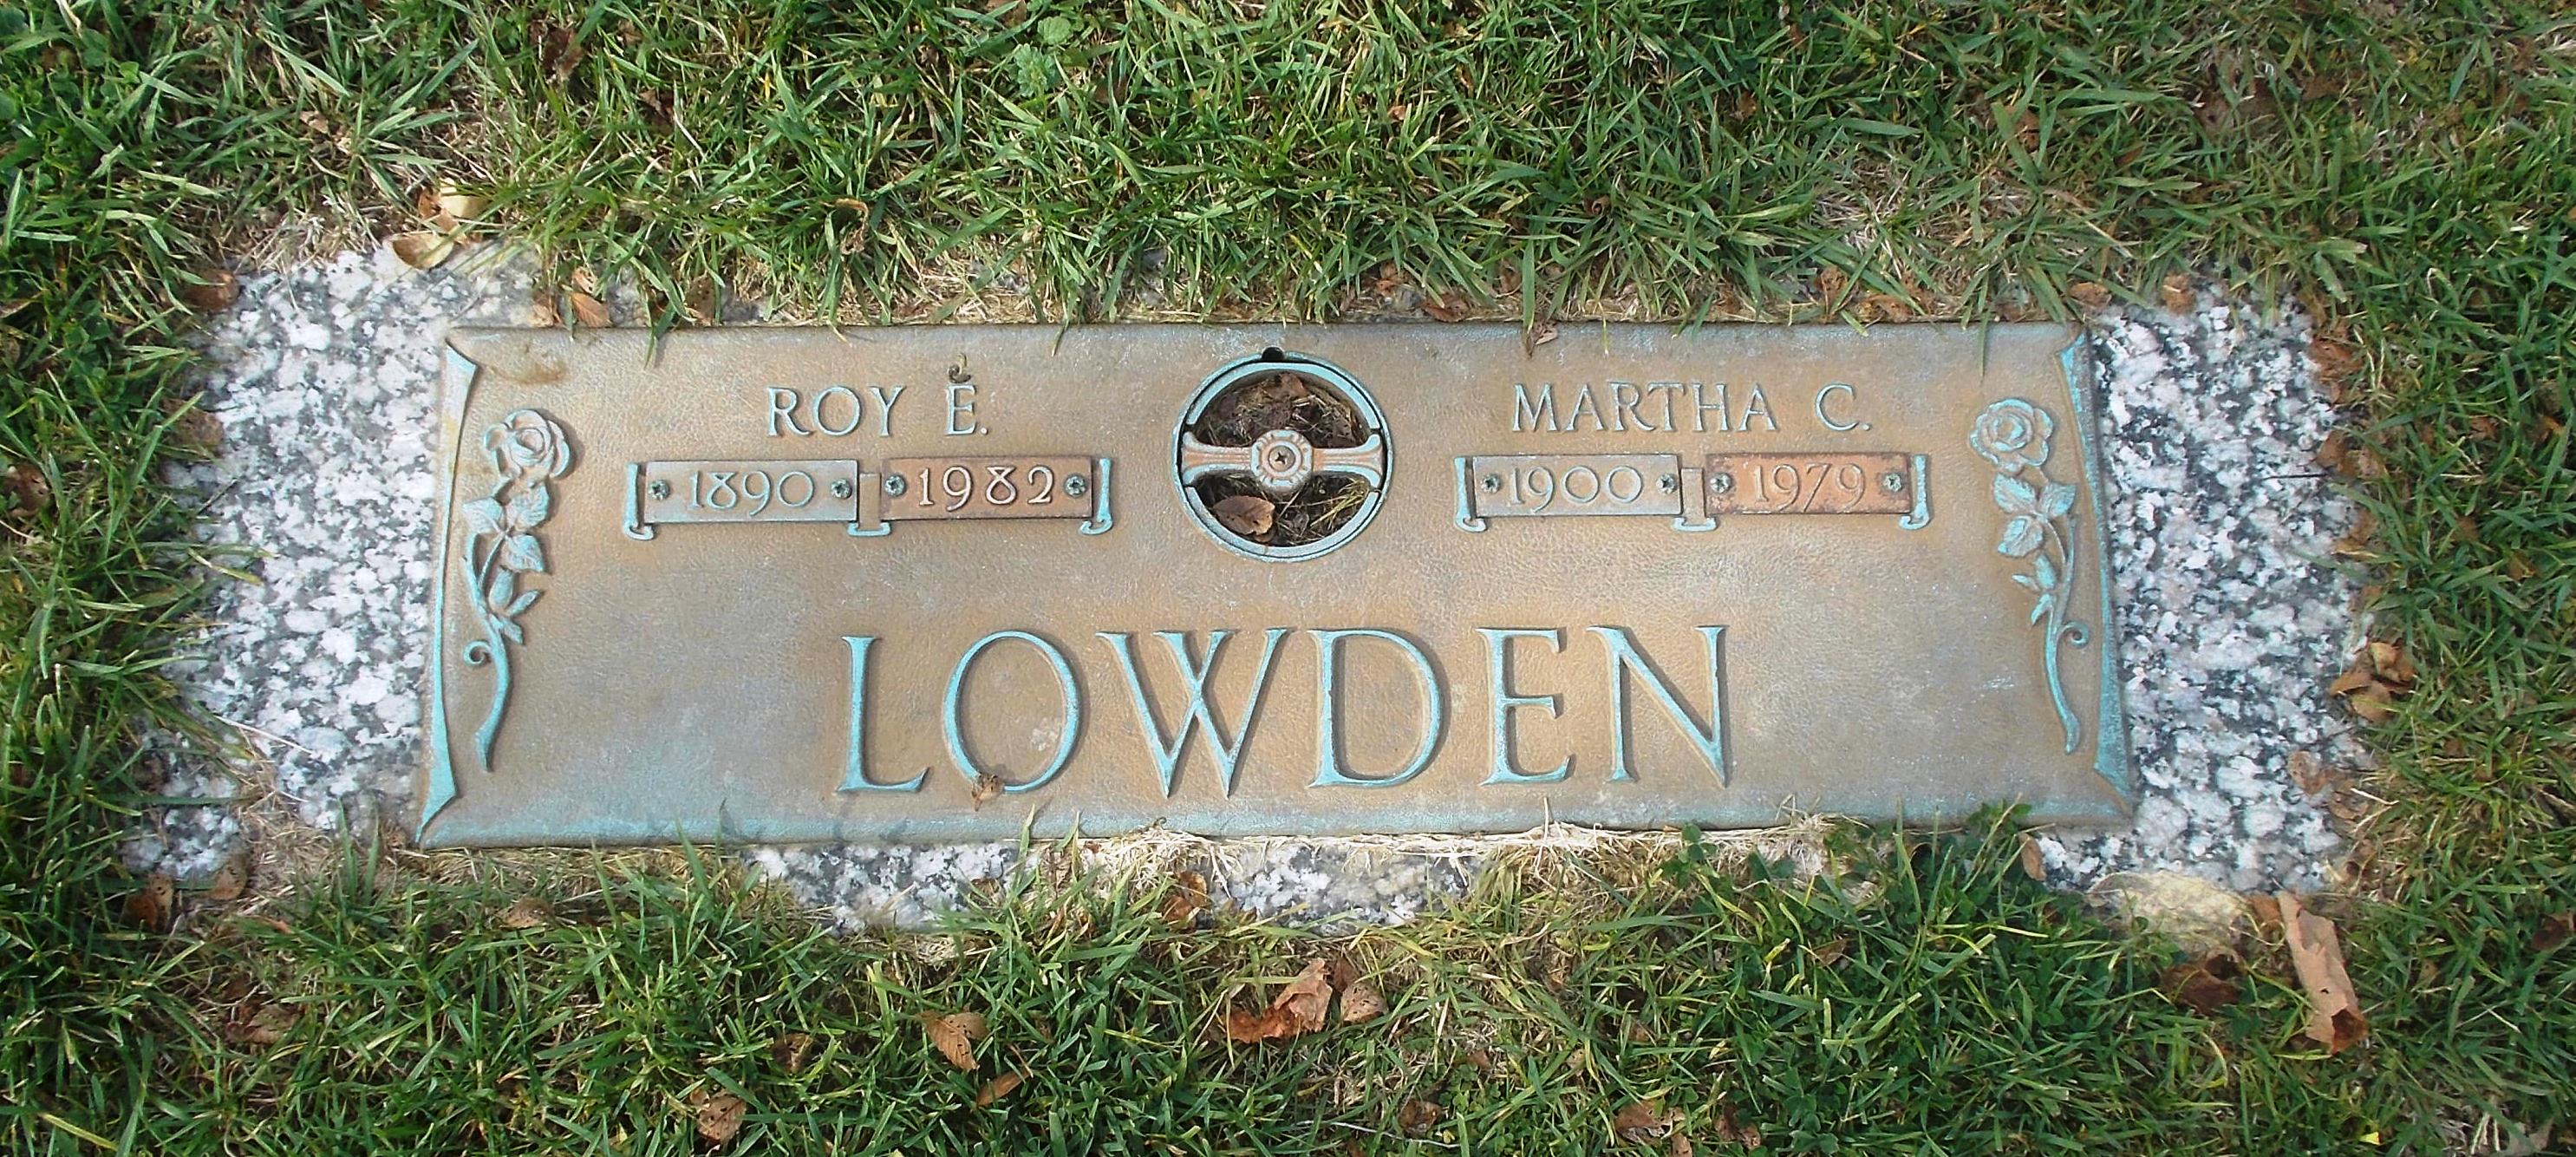 Roy E Lowden